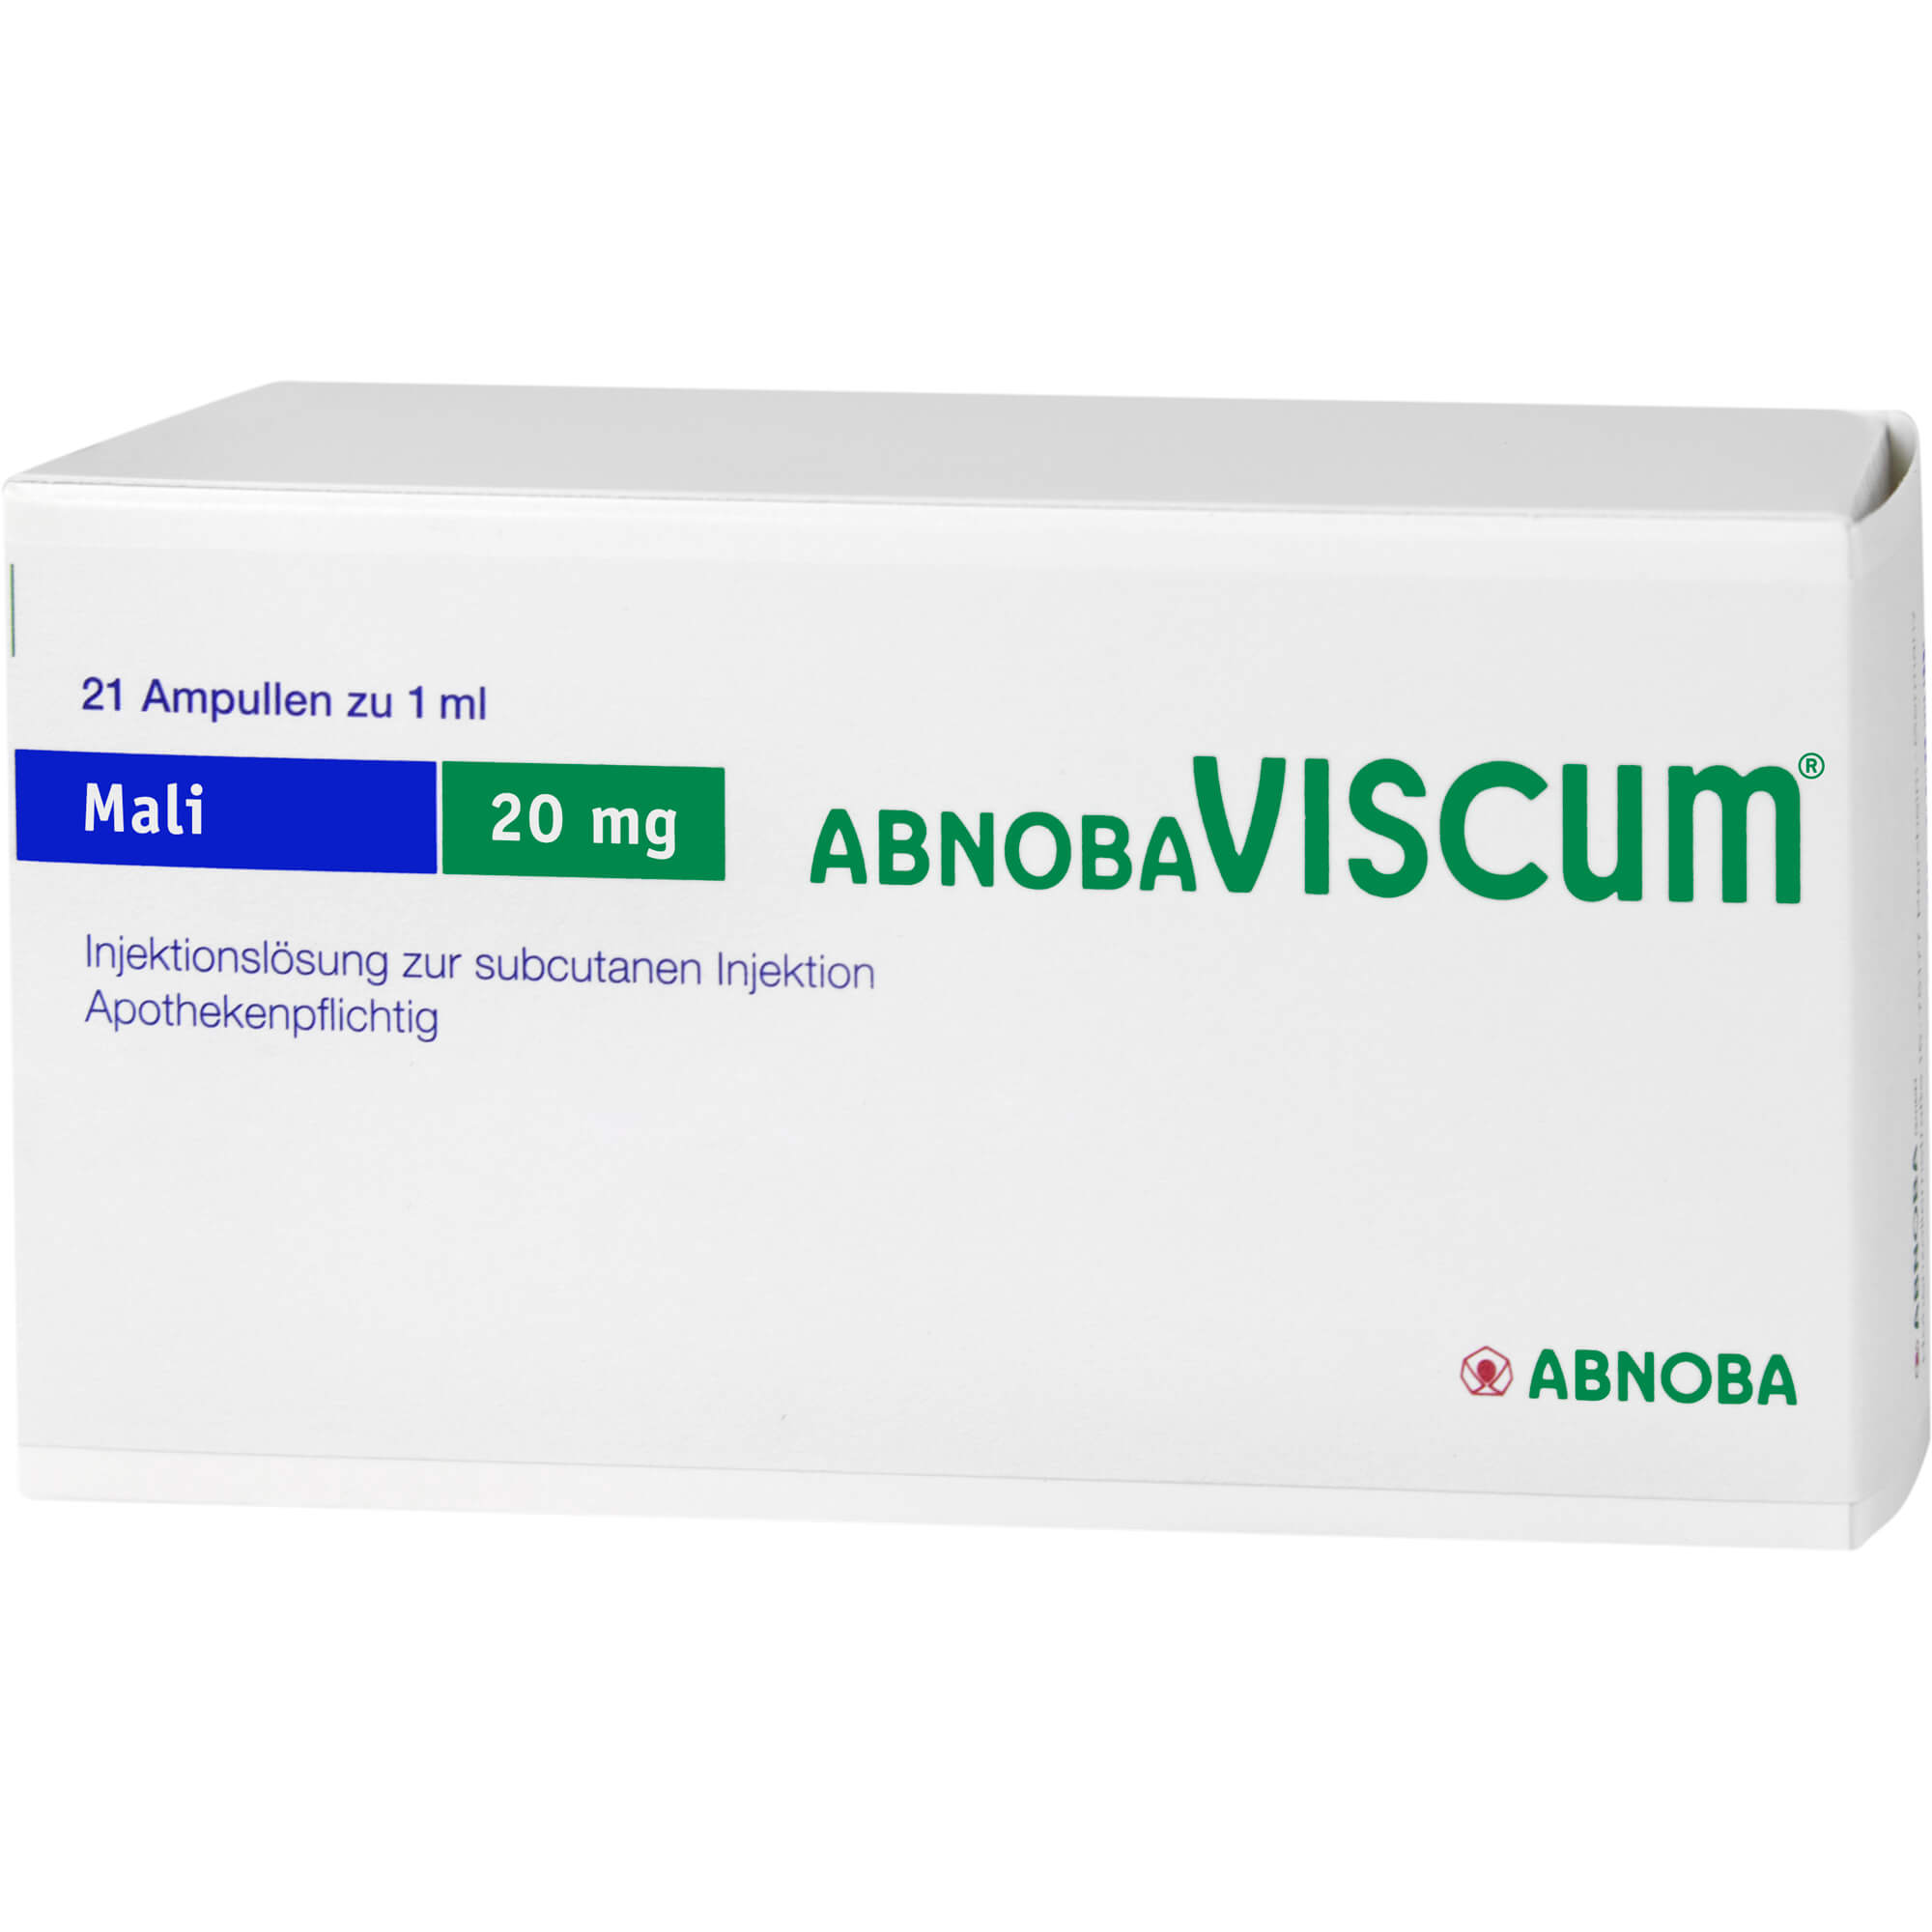 ABNOBAVISCUM Mali 20 mg Ampullen